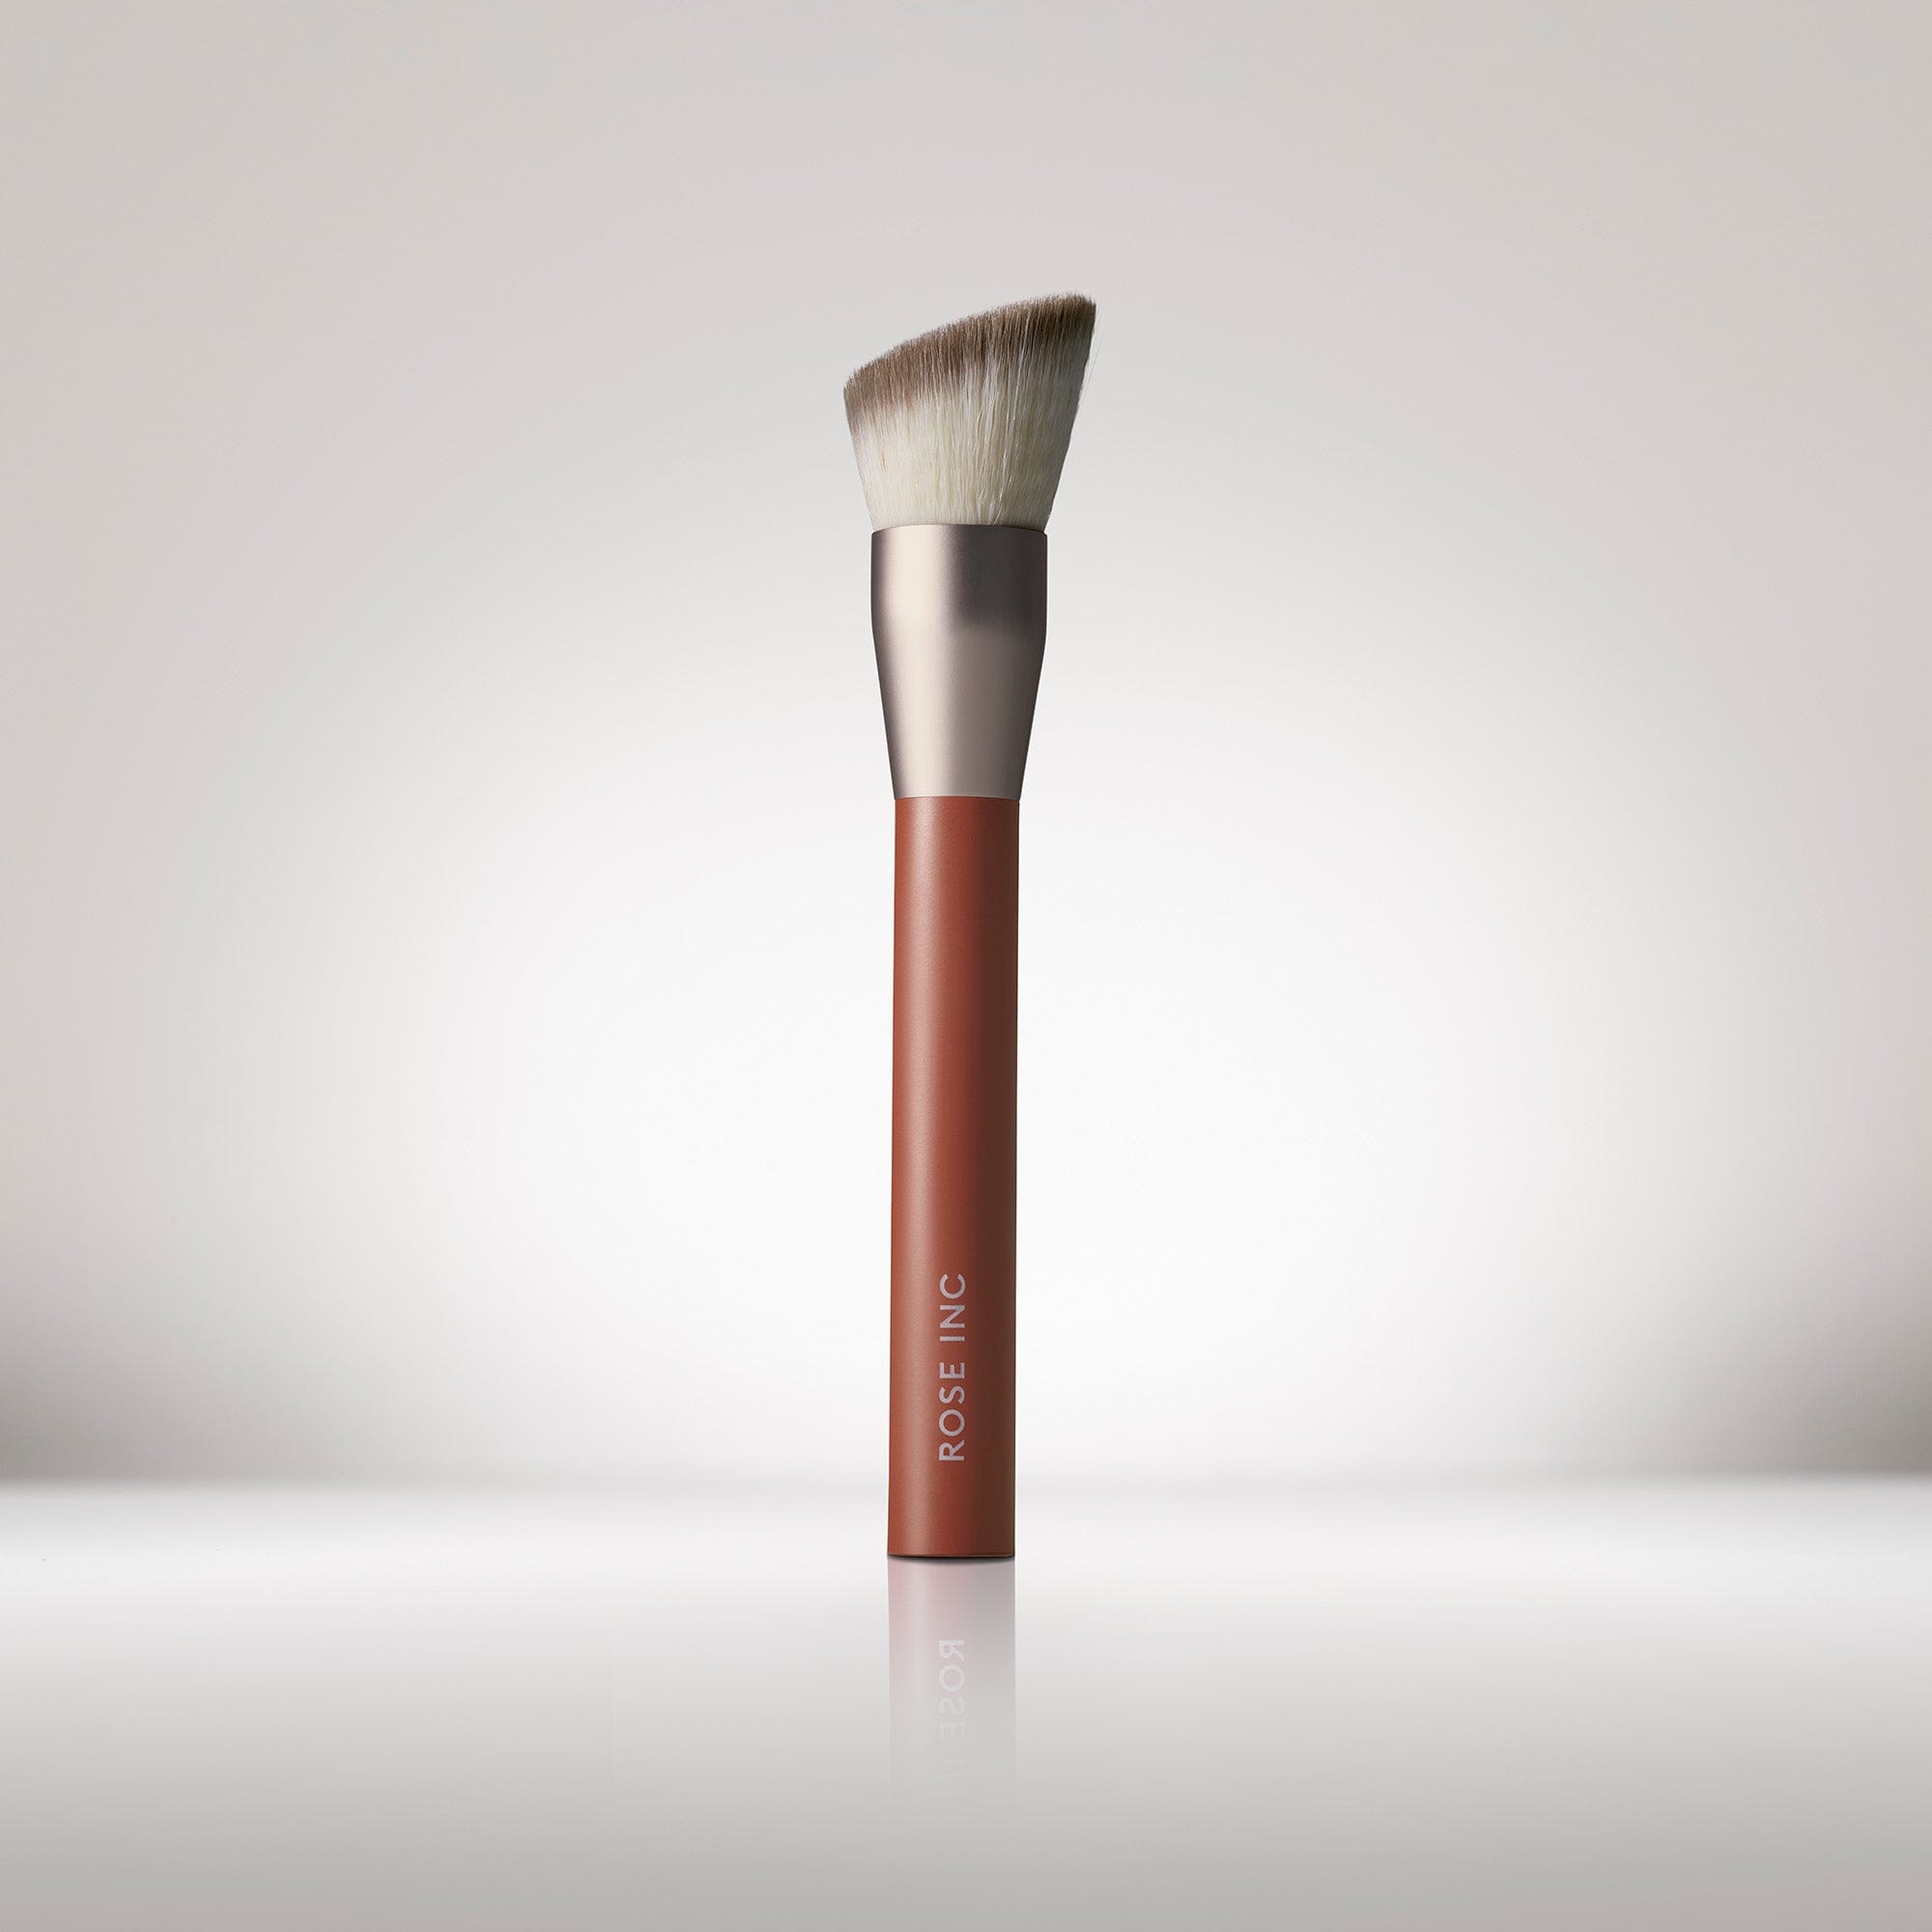 Gift Product - Number 3 Foundation Brush